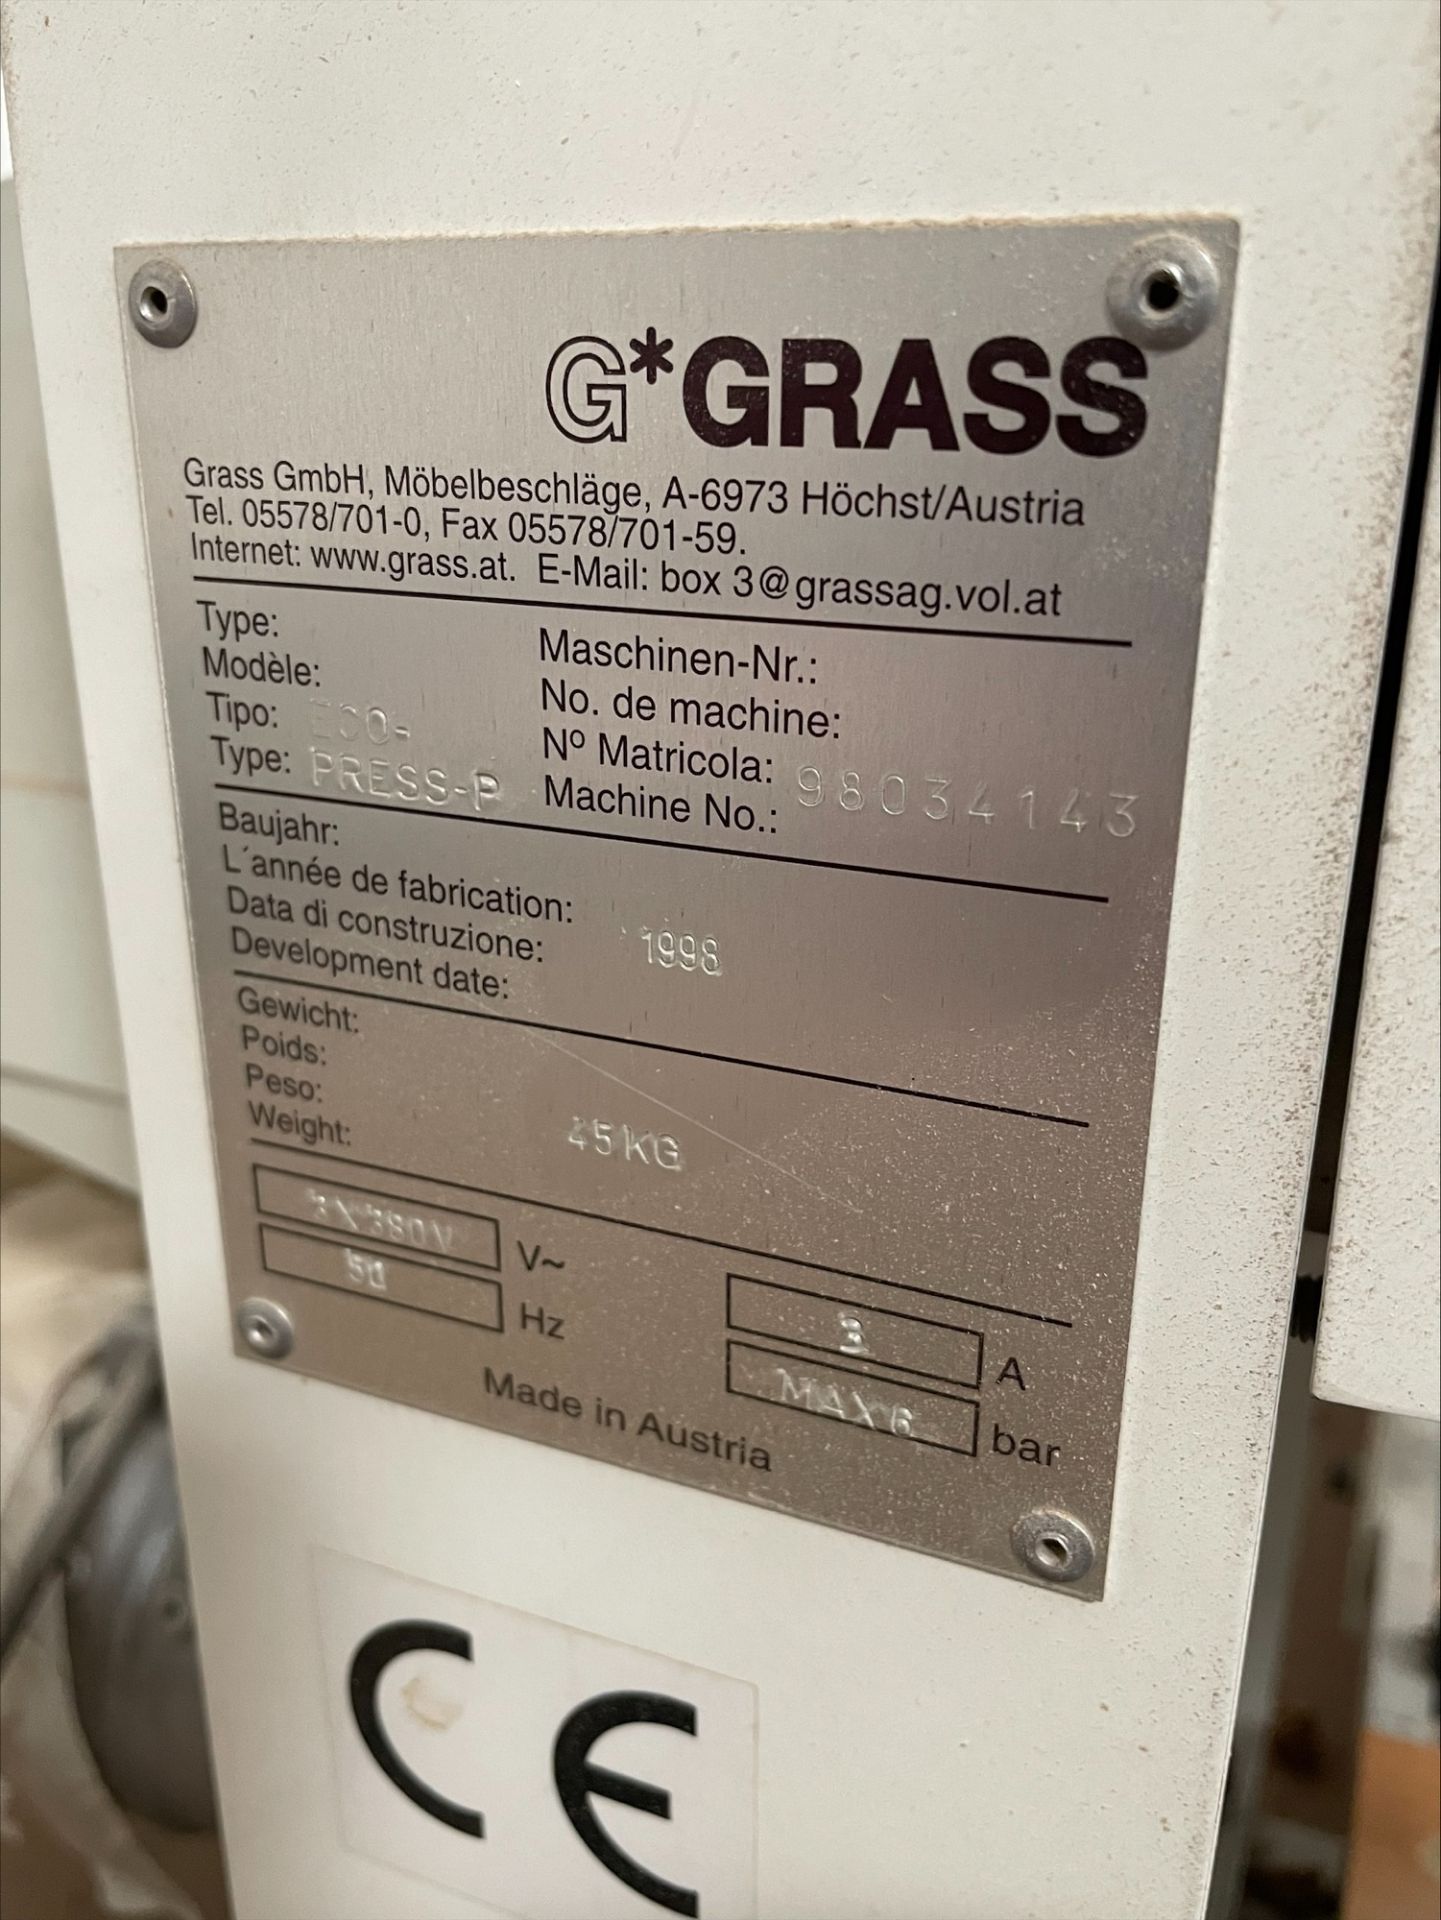 G*Grass Eco-Press P Bench mounted hinge boring & insertion machine, Serial No. 98034143 (1998) - Image 3 of 3